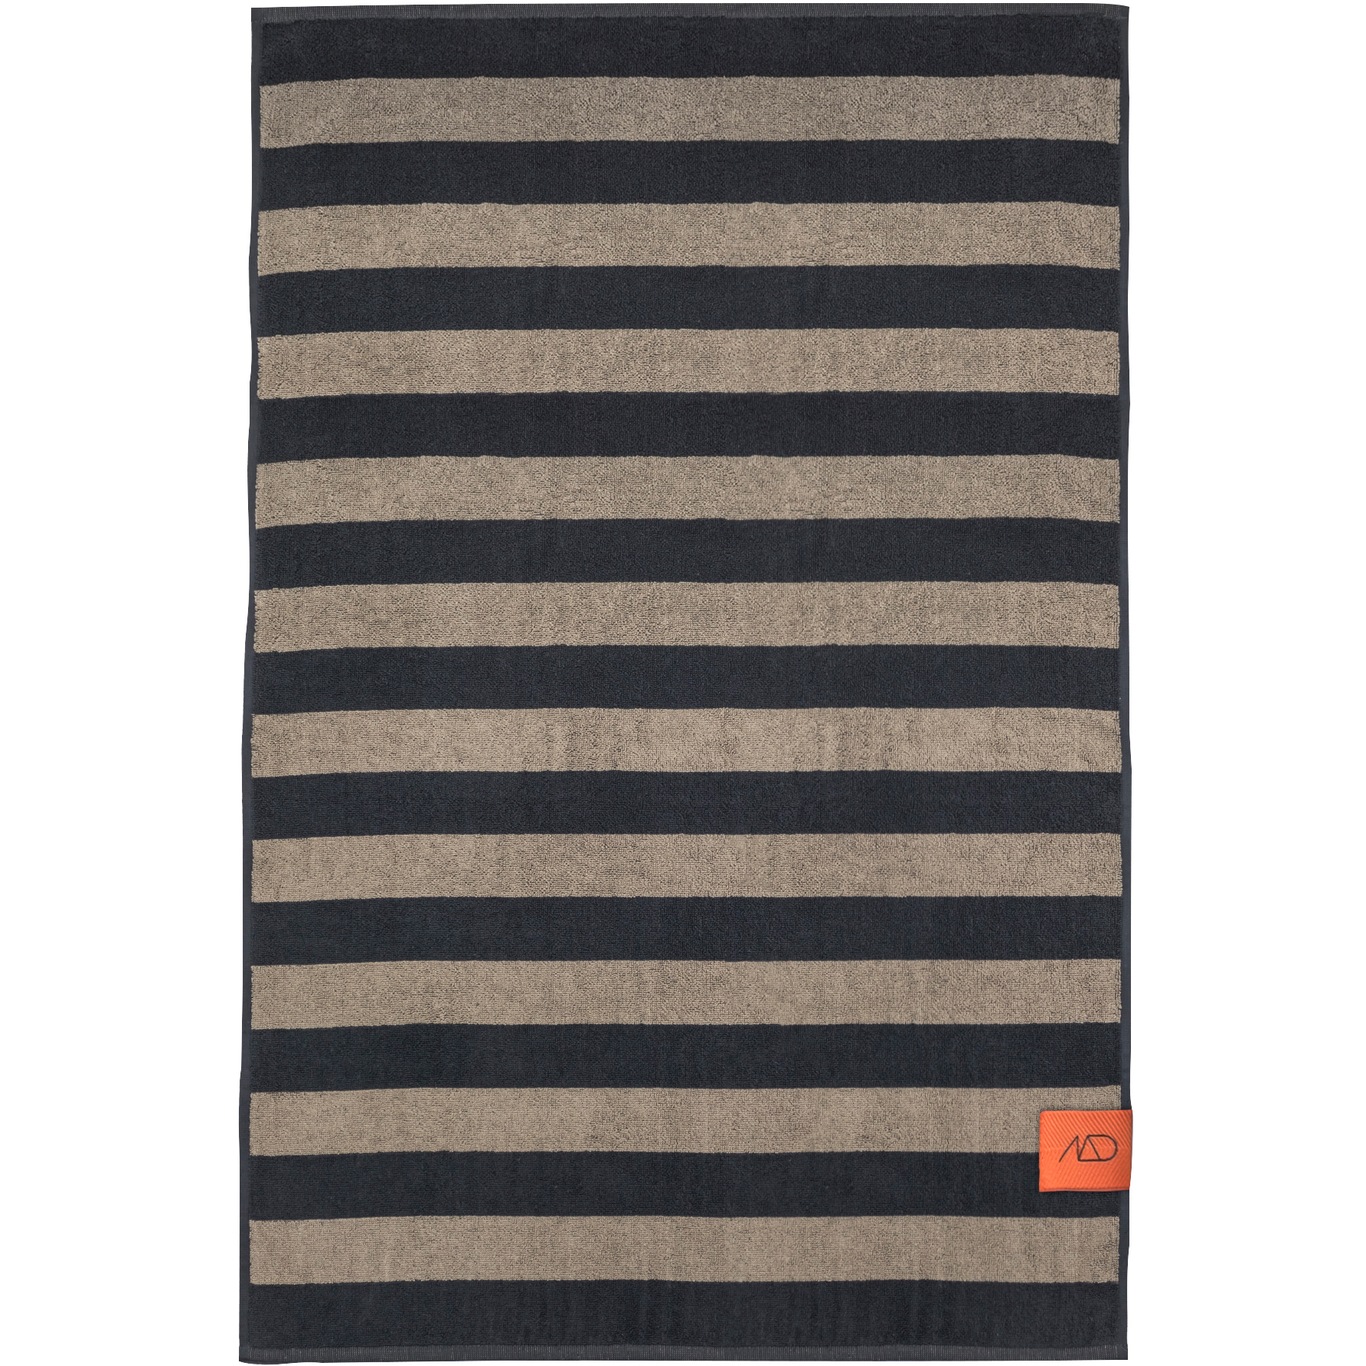 Aros Håndklæde Sand 2-pak, 35x55 cm